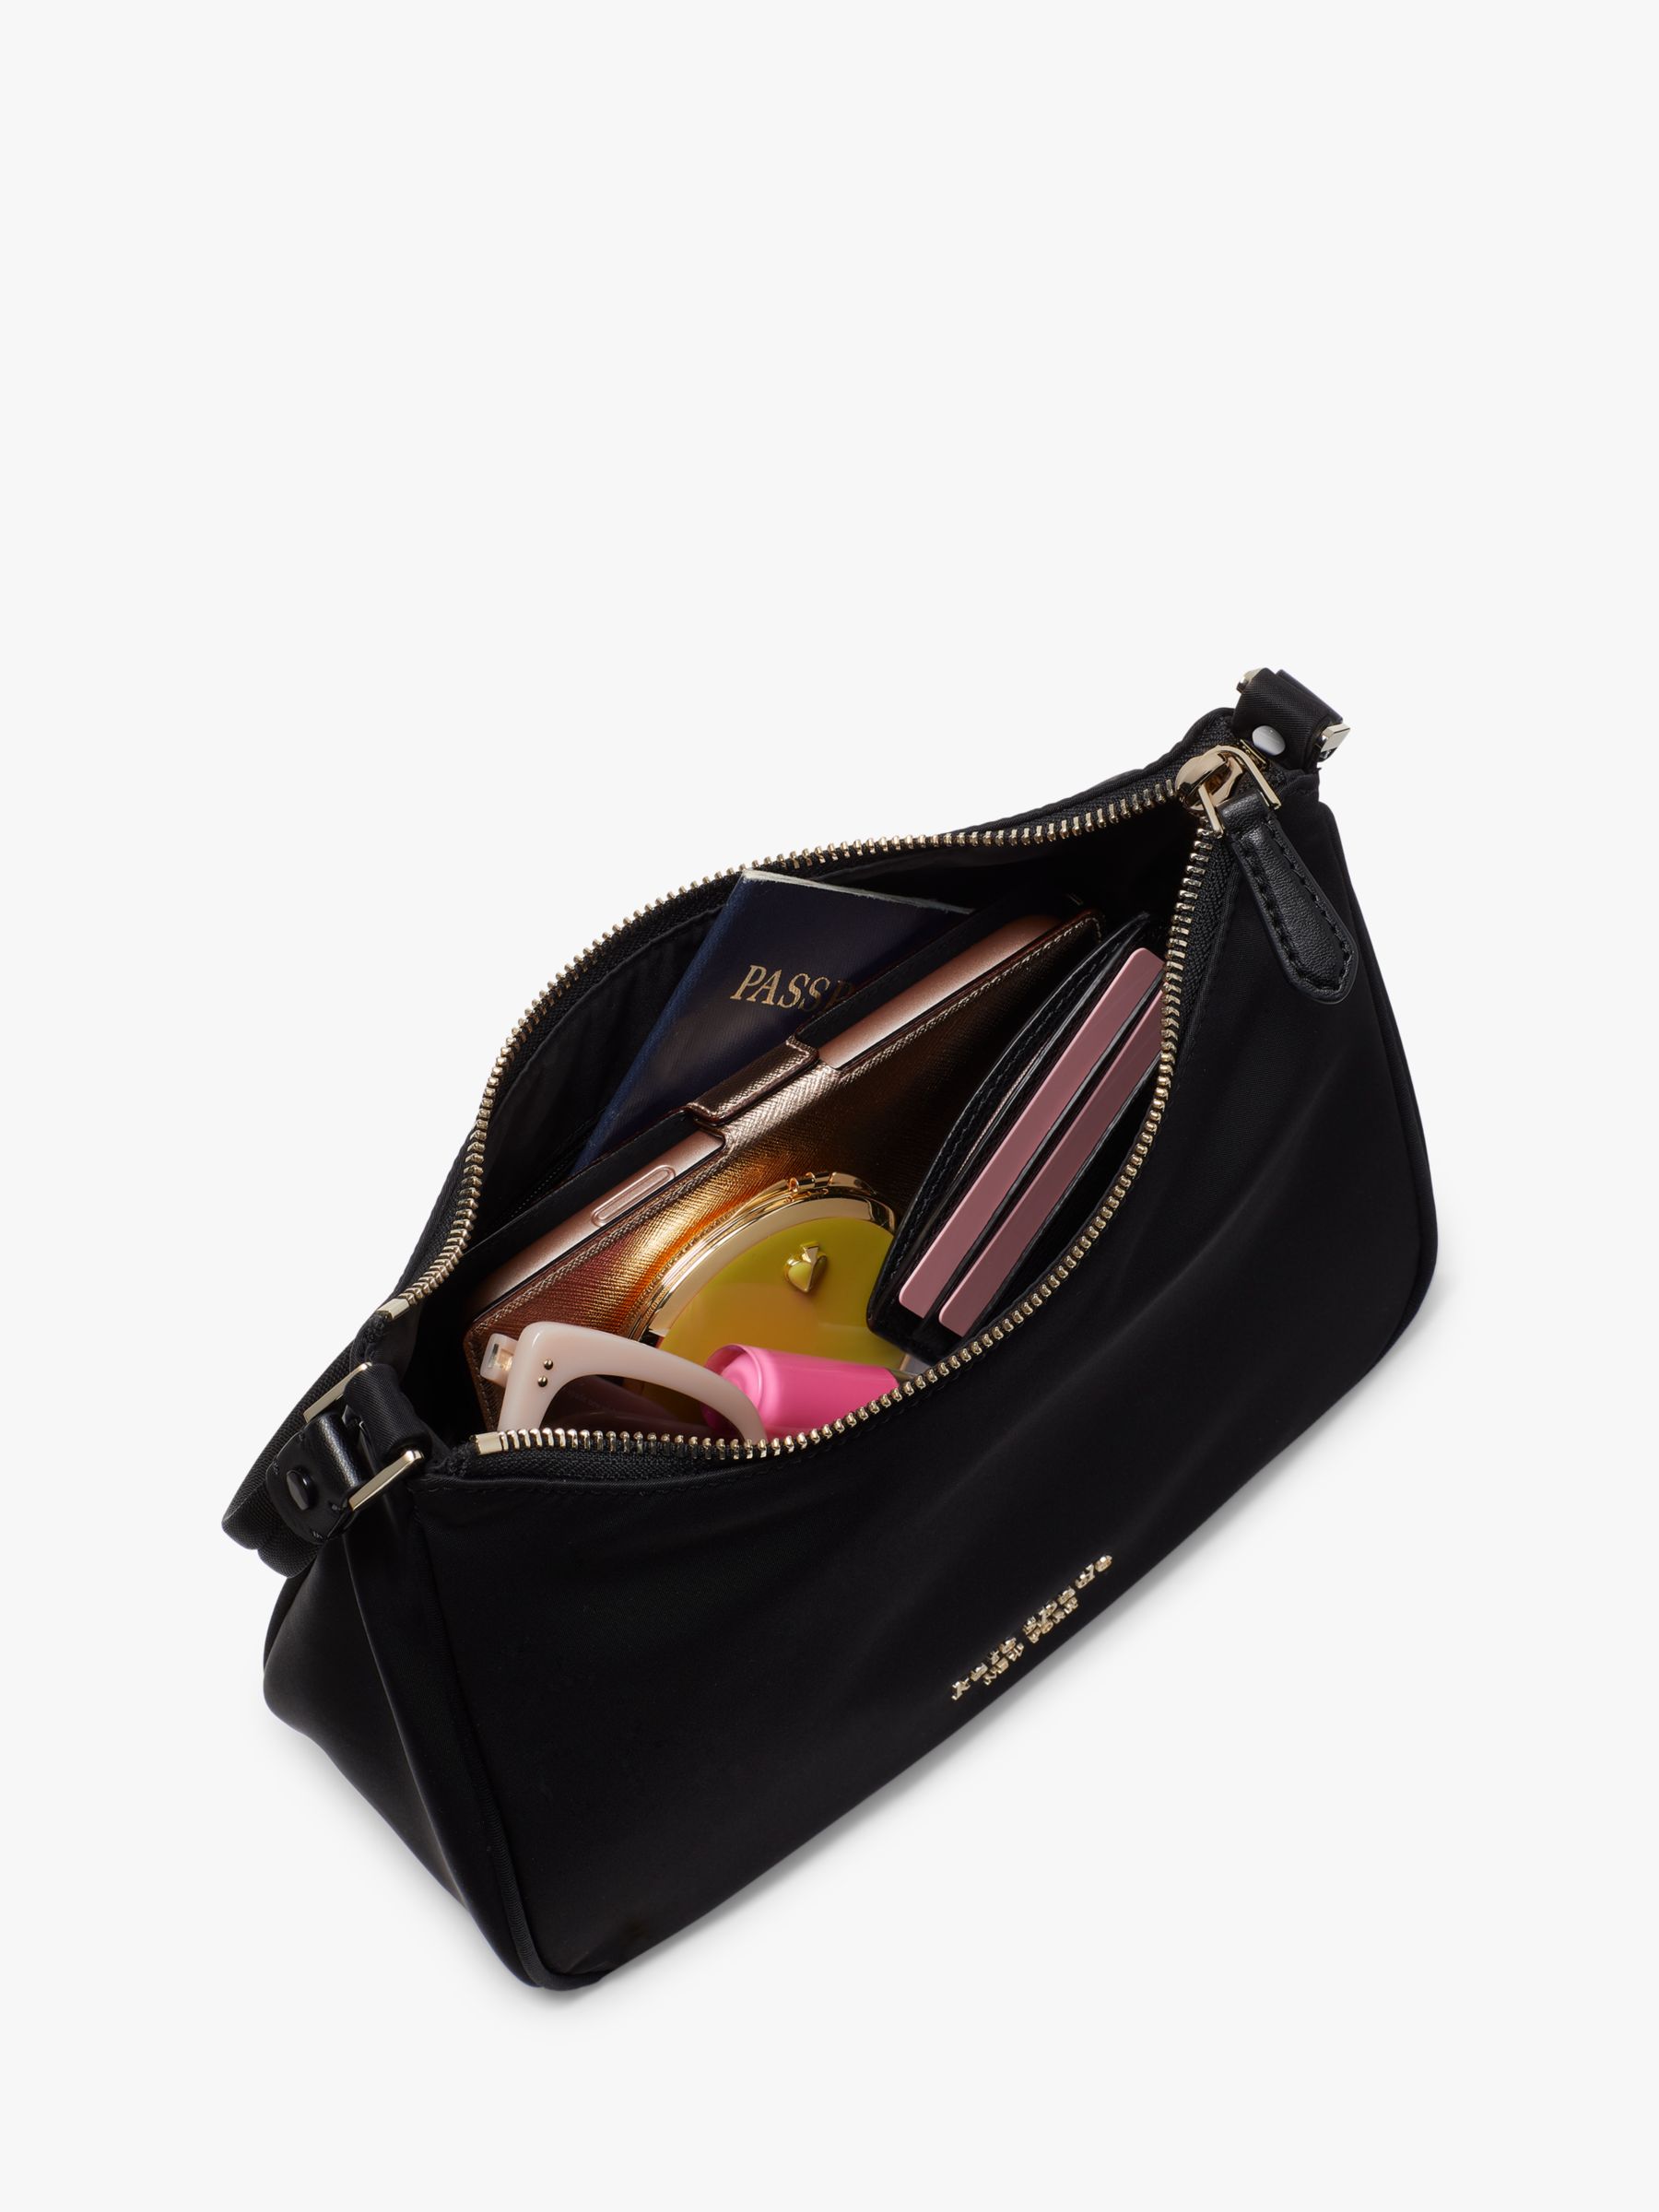 kate spade new york Nylon Shoulder Bag, Black at John Lewis & Partners